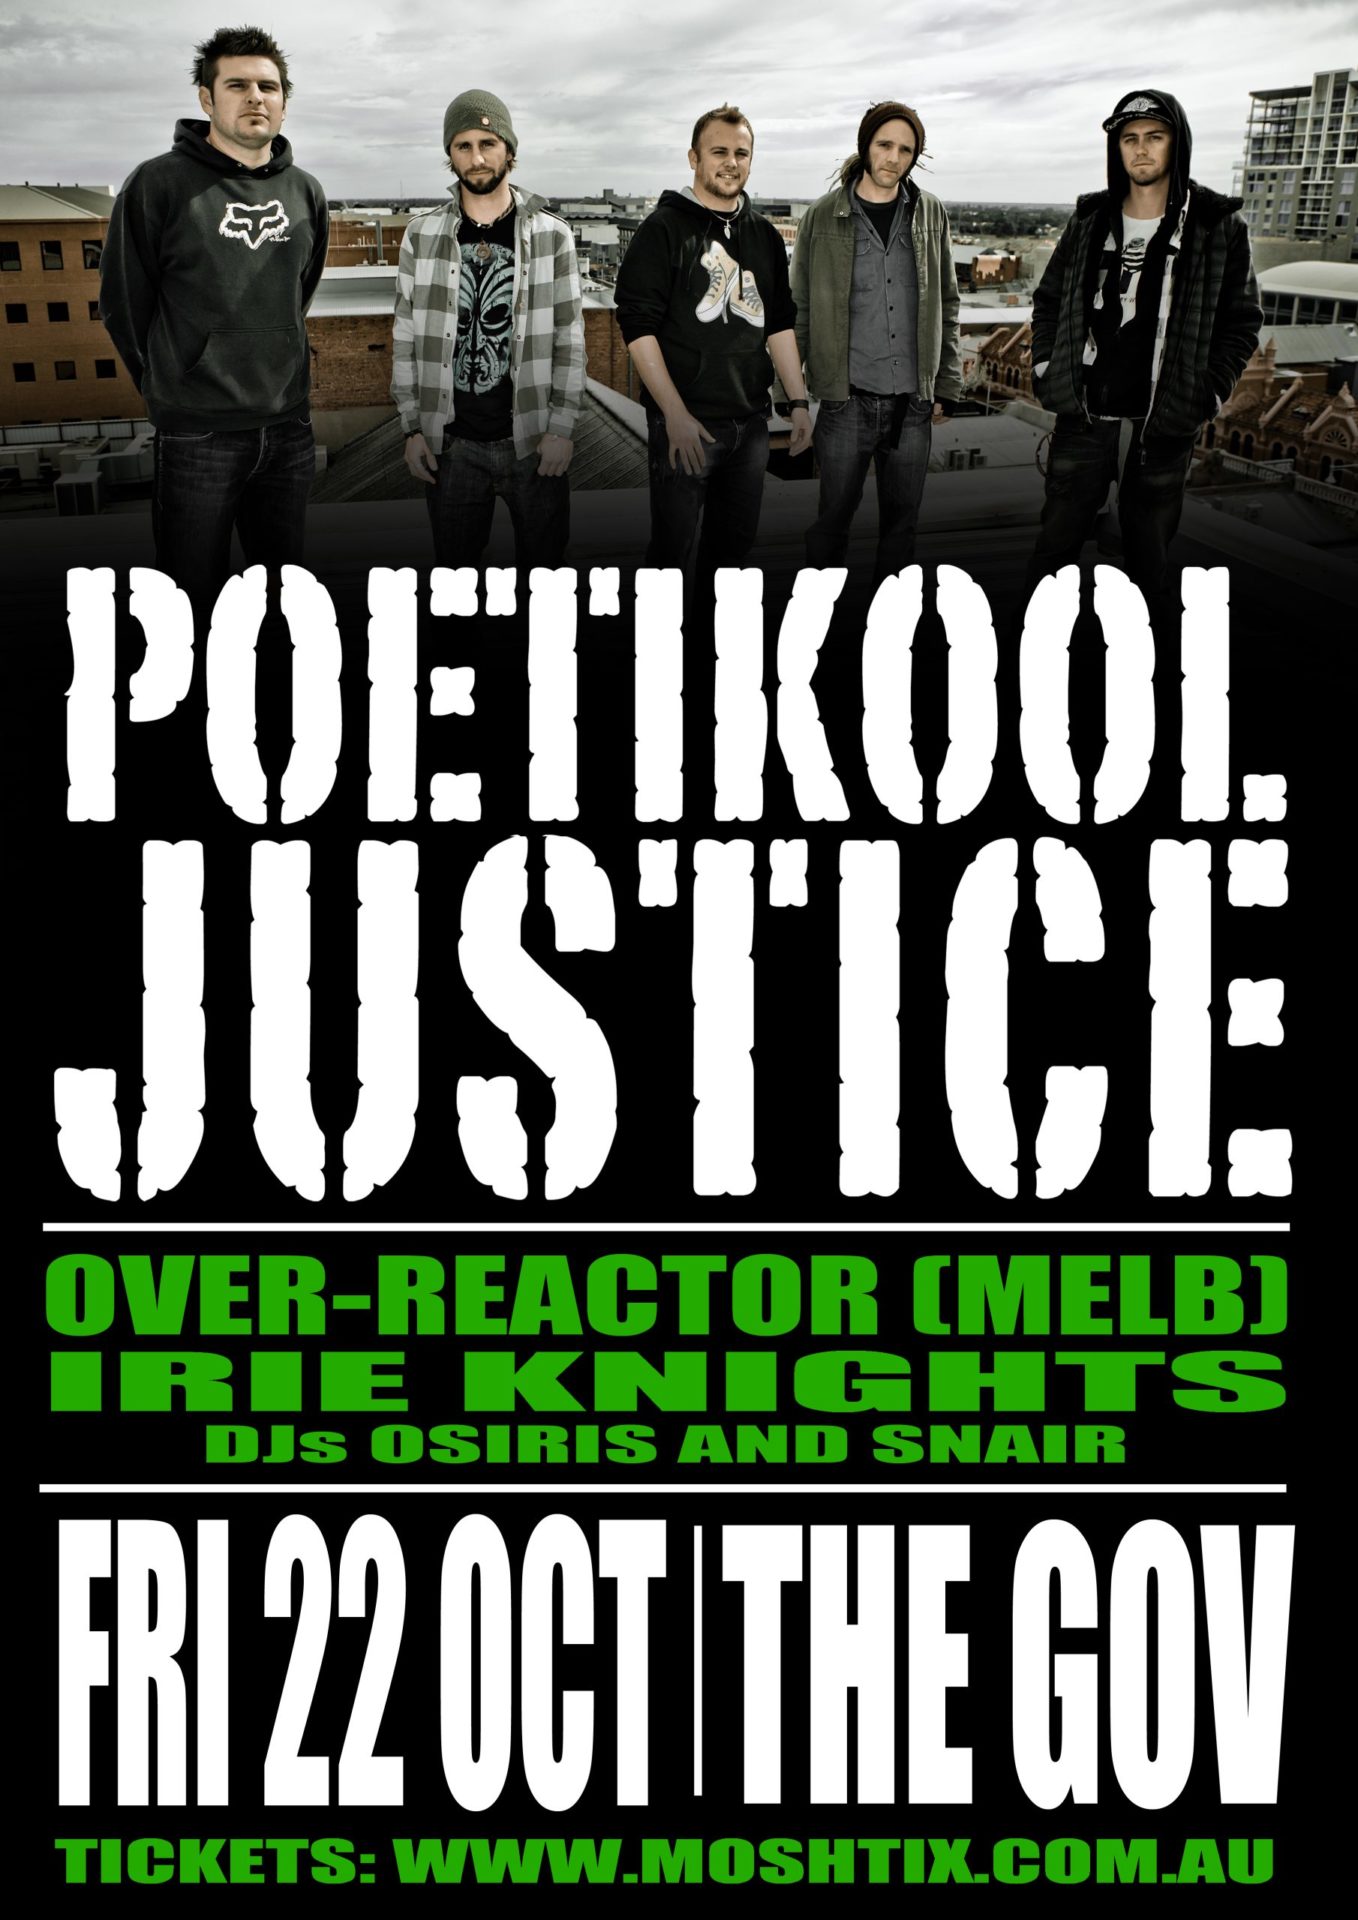 Poetikool Justice Poster, August ’10